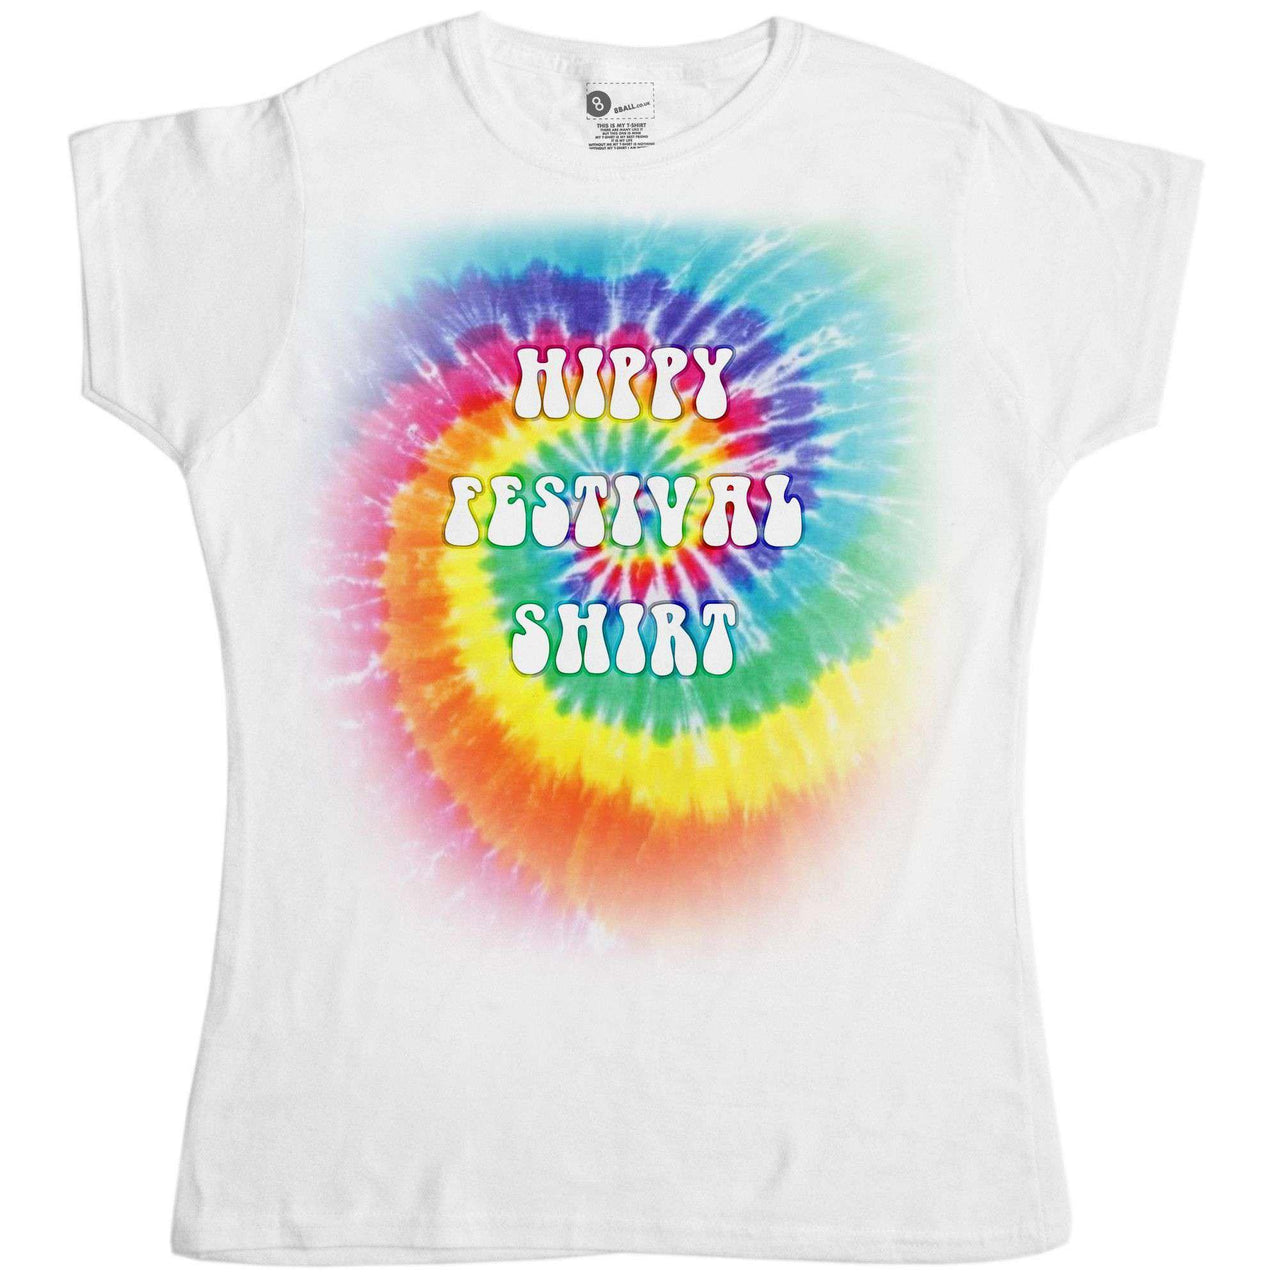 Hippy Festival Womens T-Shirt 8Ball